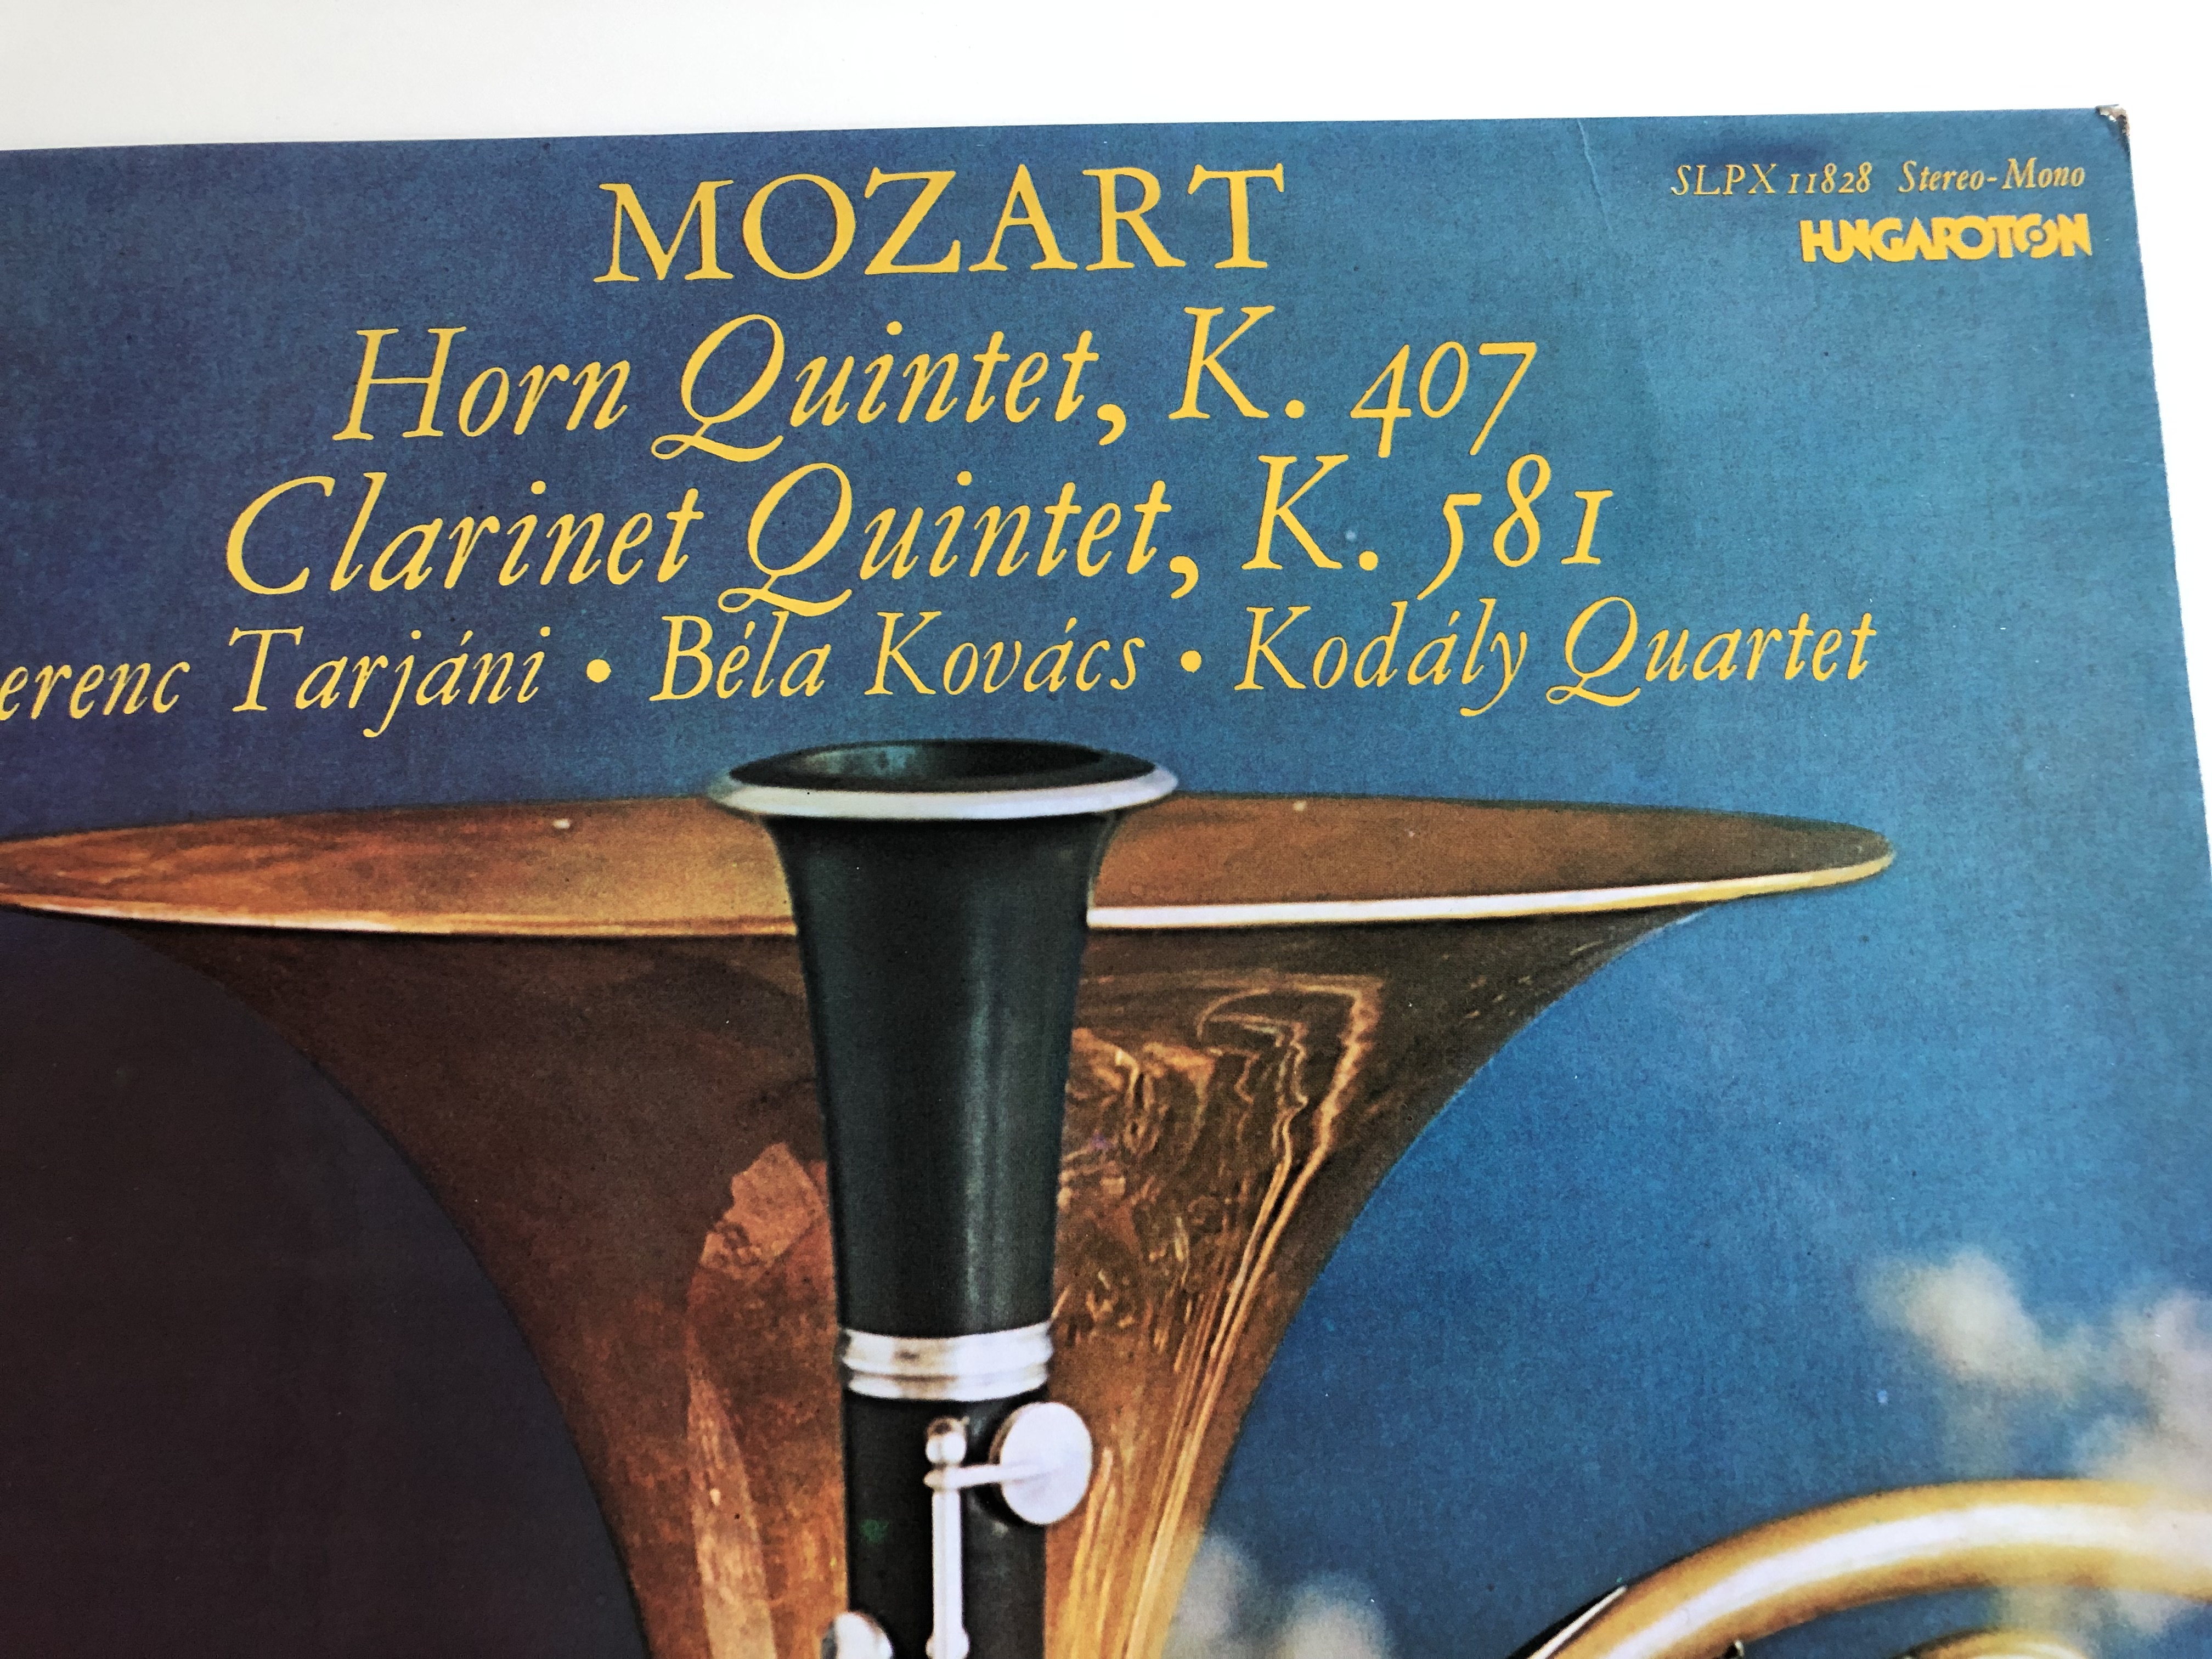 mozart-horn-quintet-k.-407-clarinet-quintet-k.581-horn-ferenc-tarjani-clarinet-bela-kovacs-ensemble-kodaly-quartet-hungaroton-lp-stereo-mono-slpx-11828-2-.jpg